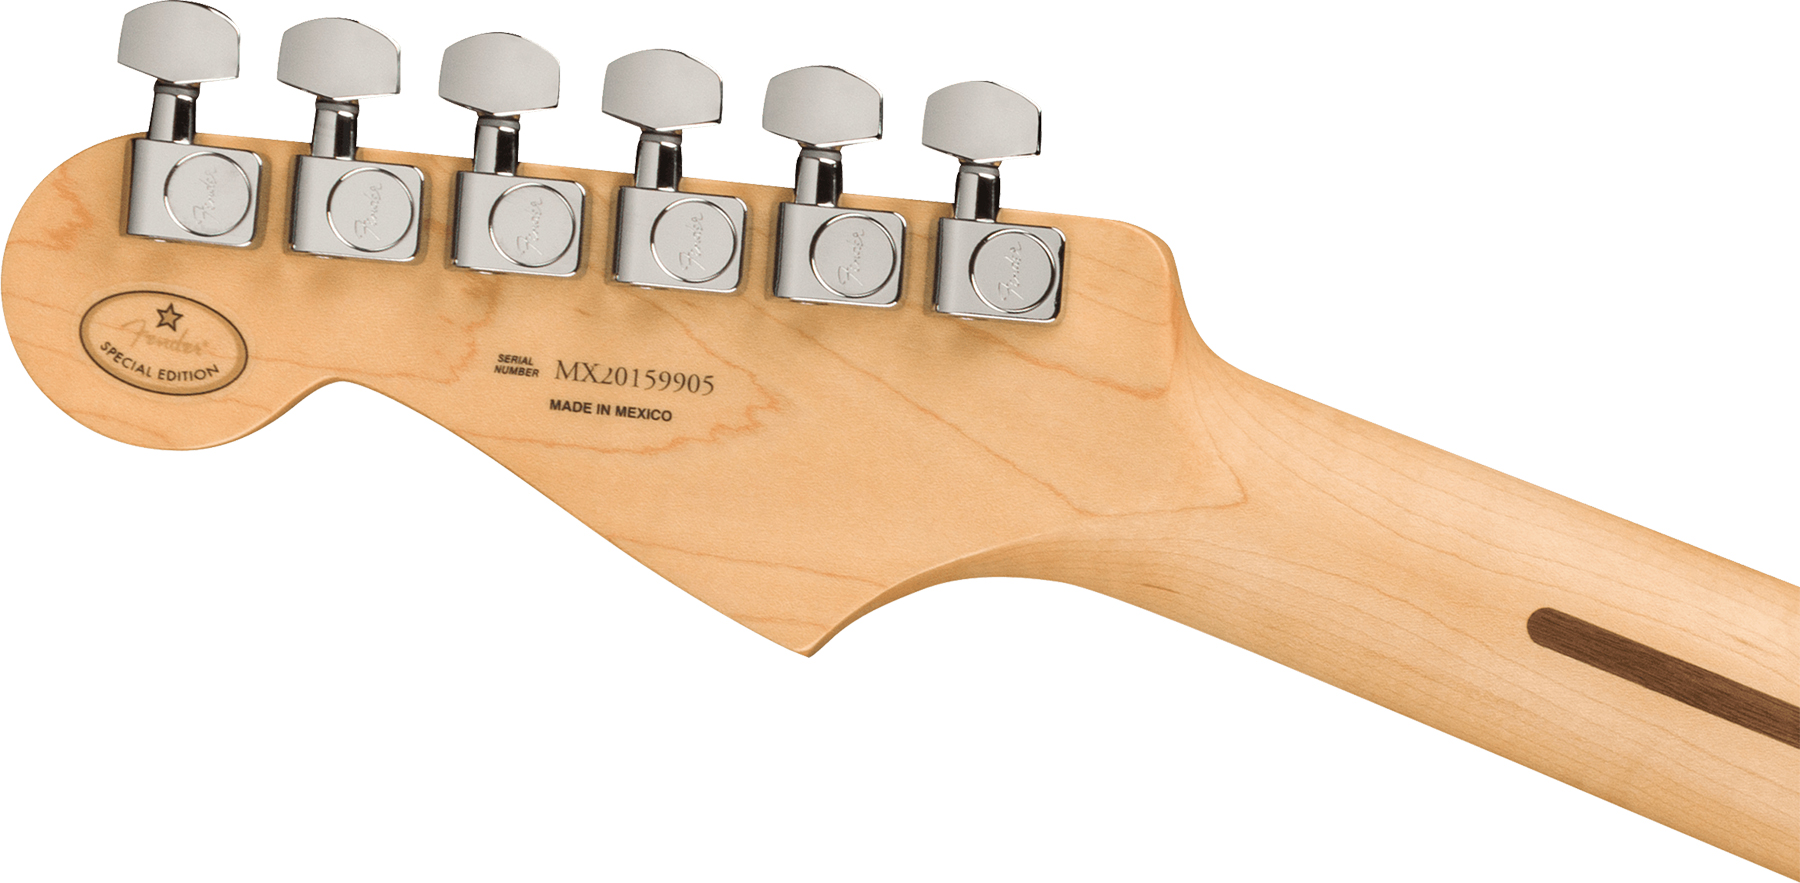 Fender Strat Player Ltd Mex 3s Trem Mn - Pacific Peach - Str shape electric guitar - Variation 3